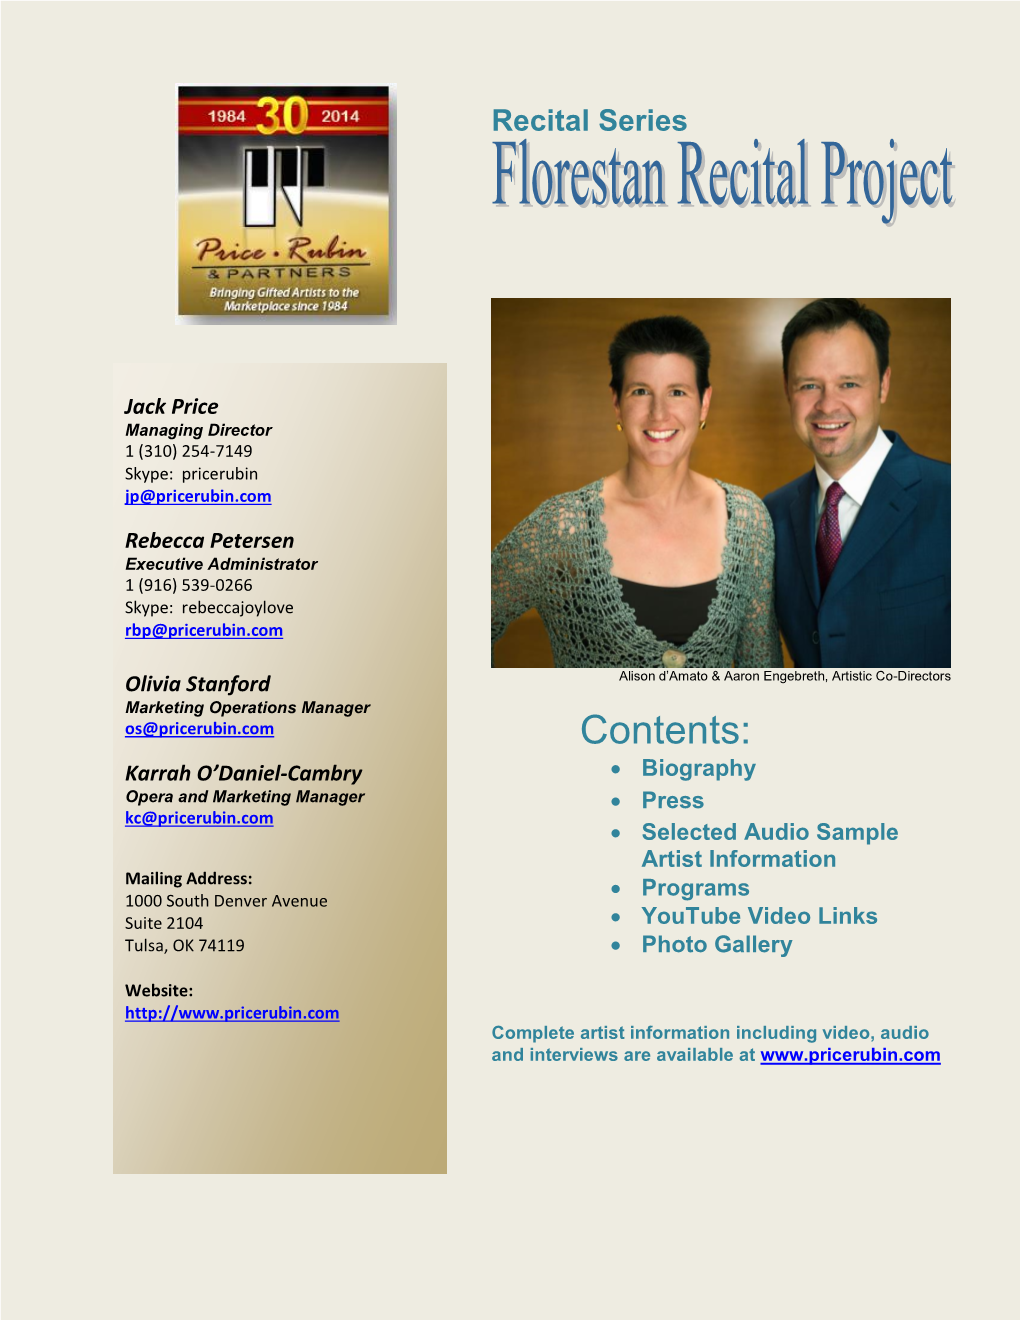 Florestan Recital Project – Biography